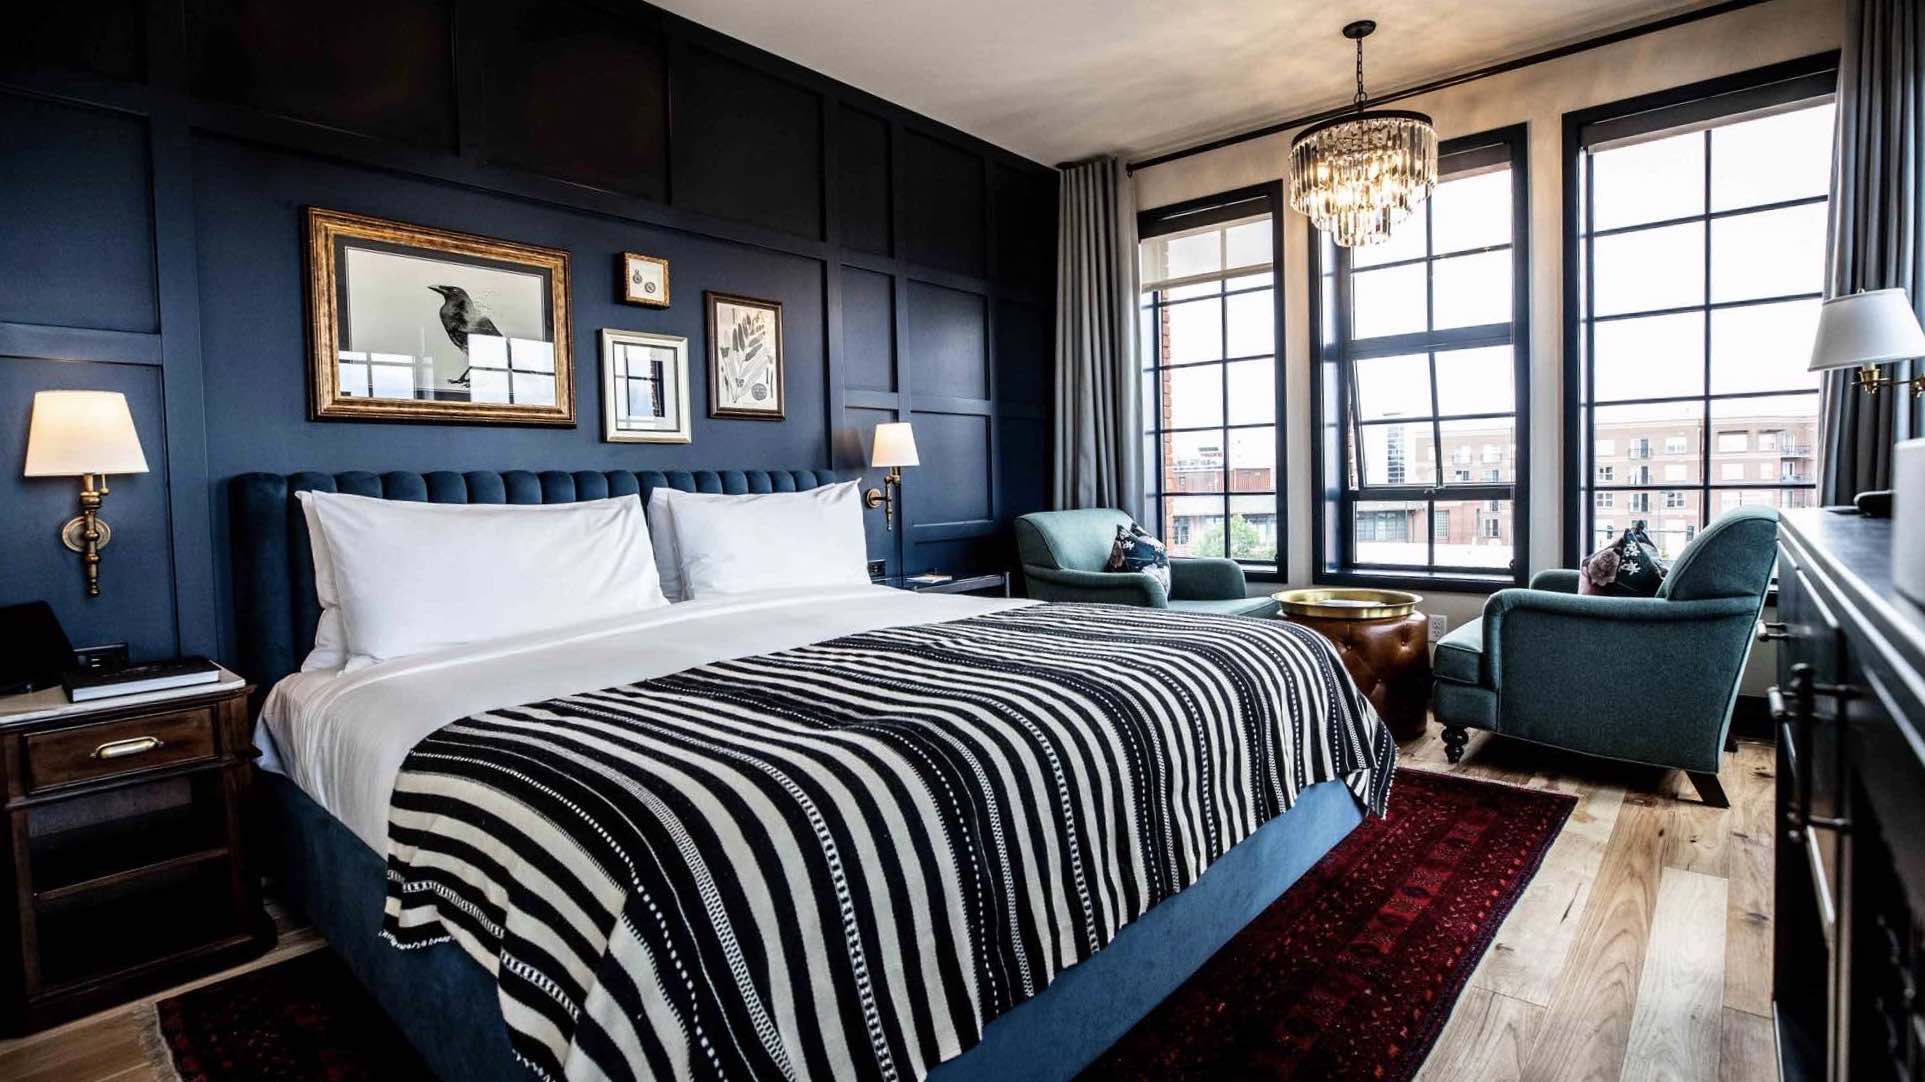 The Ramble Hotel - interior bedroom of best boutique hotels queen suite